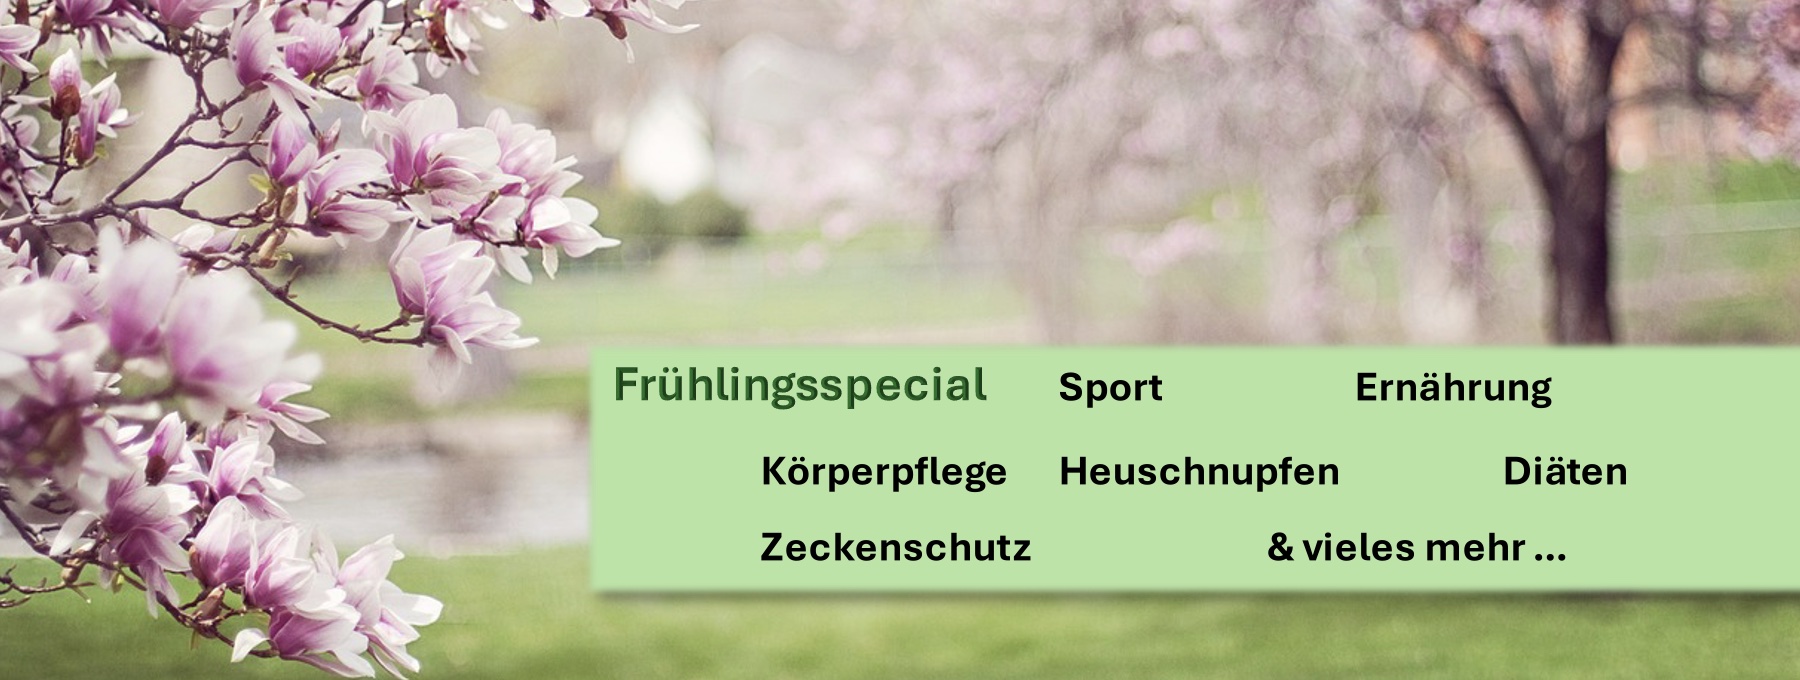 Gesundheitstipps im Frühling - apotheken-wissen.de